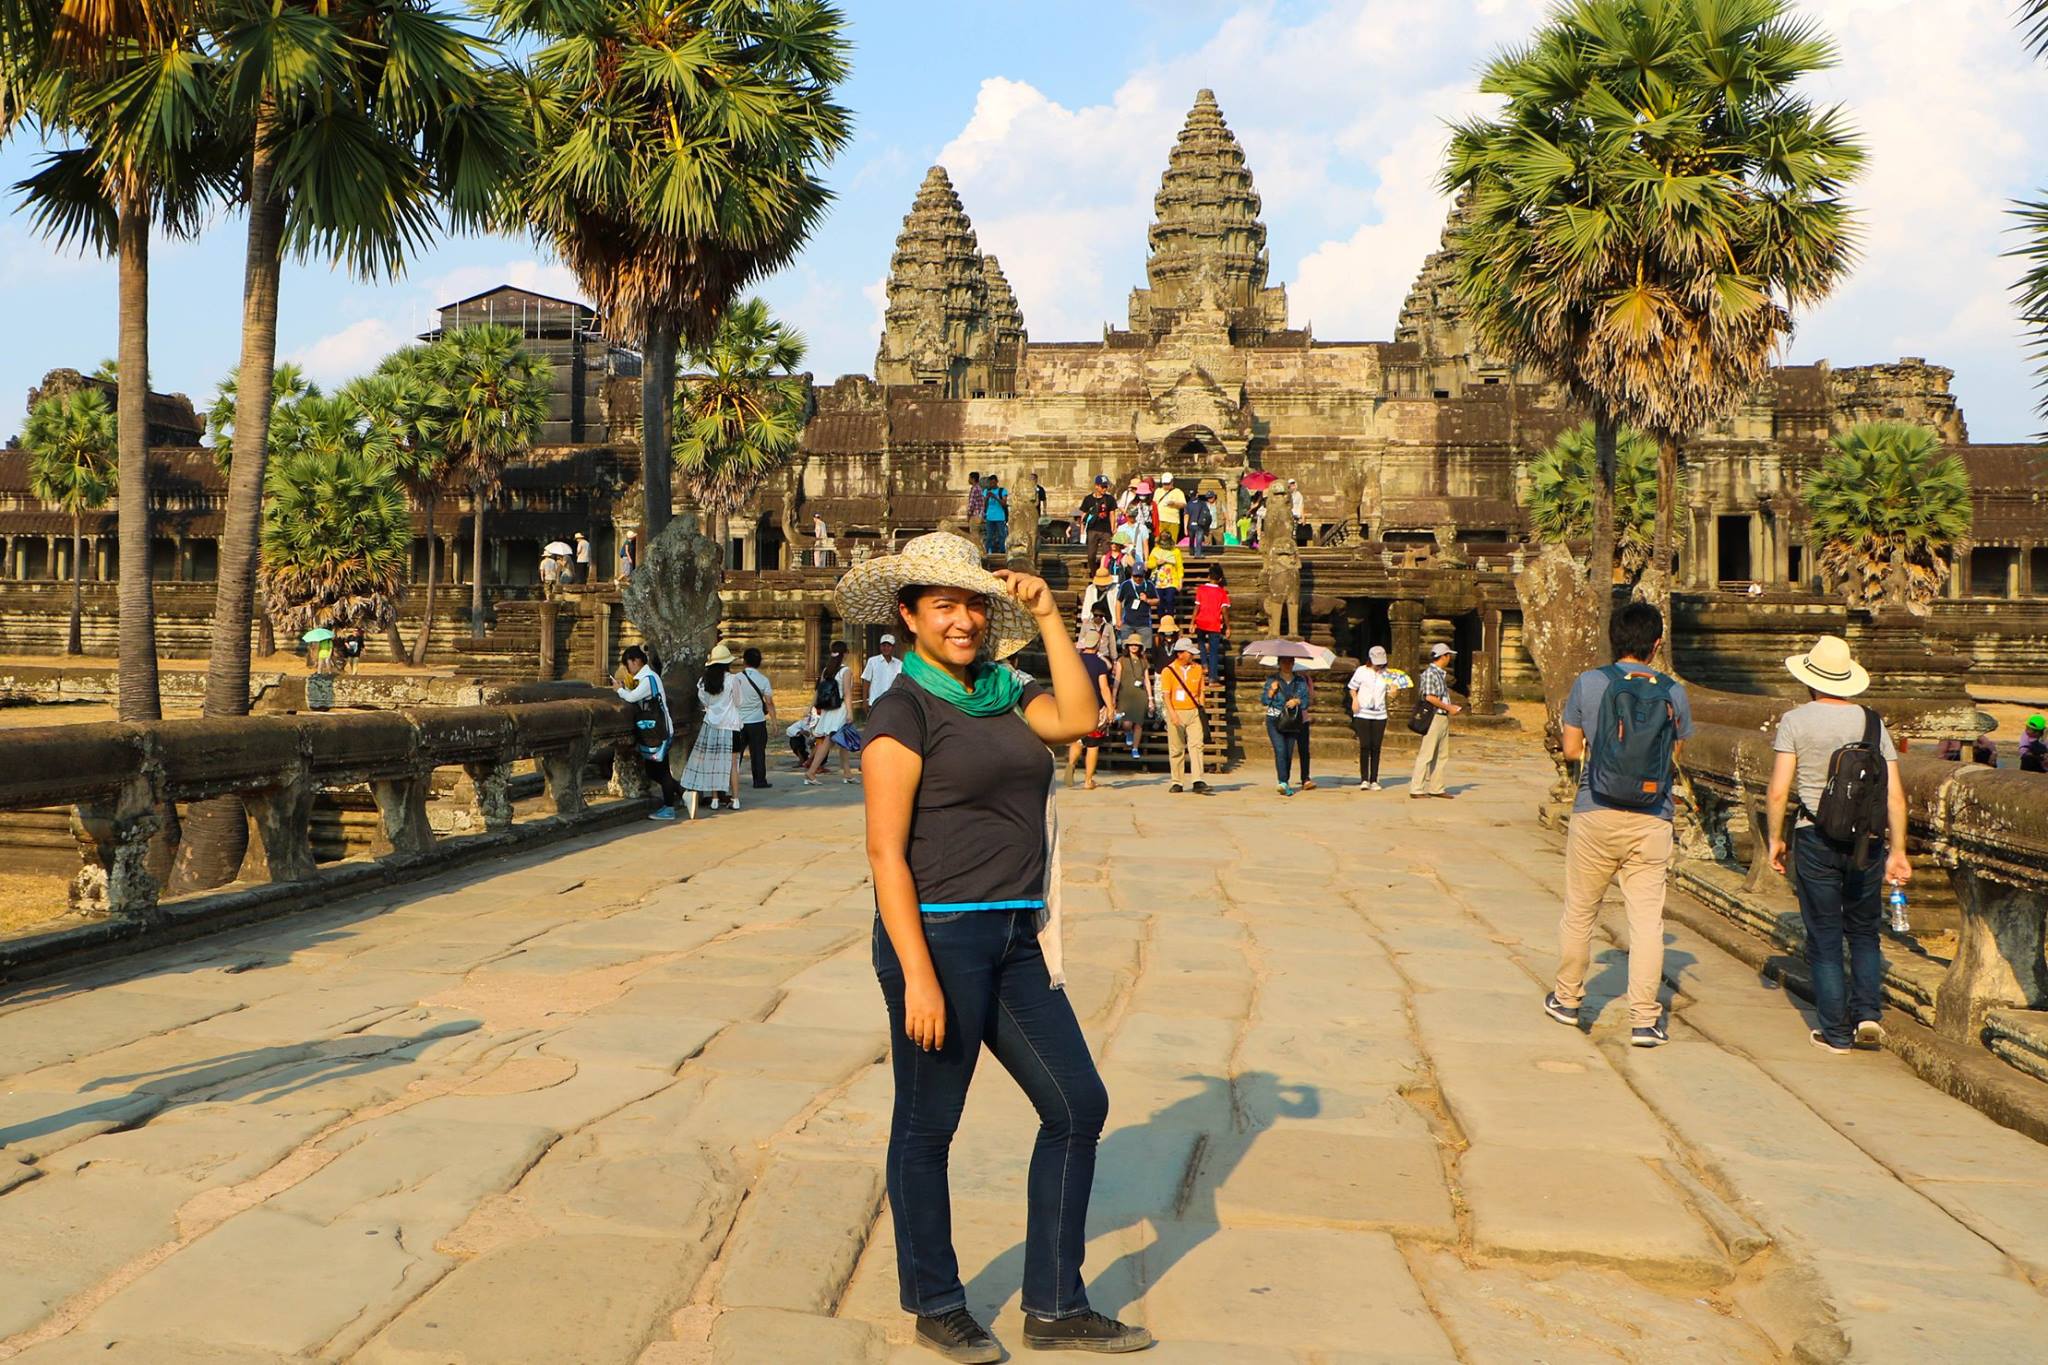 Carolina Borrás standing in front of the Angkor Wat temple in Cambodia (Courtesy of Carolina Borrás)